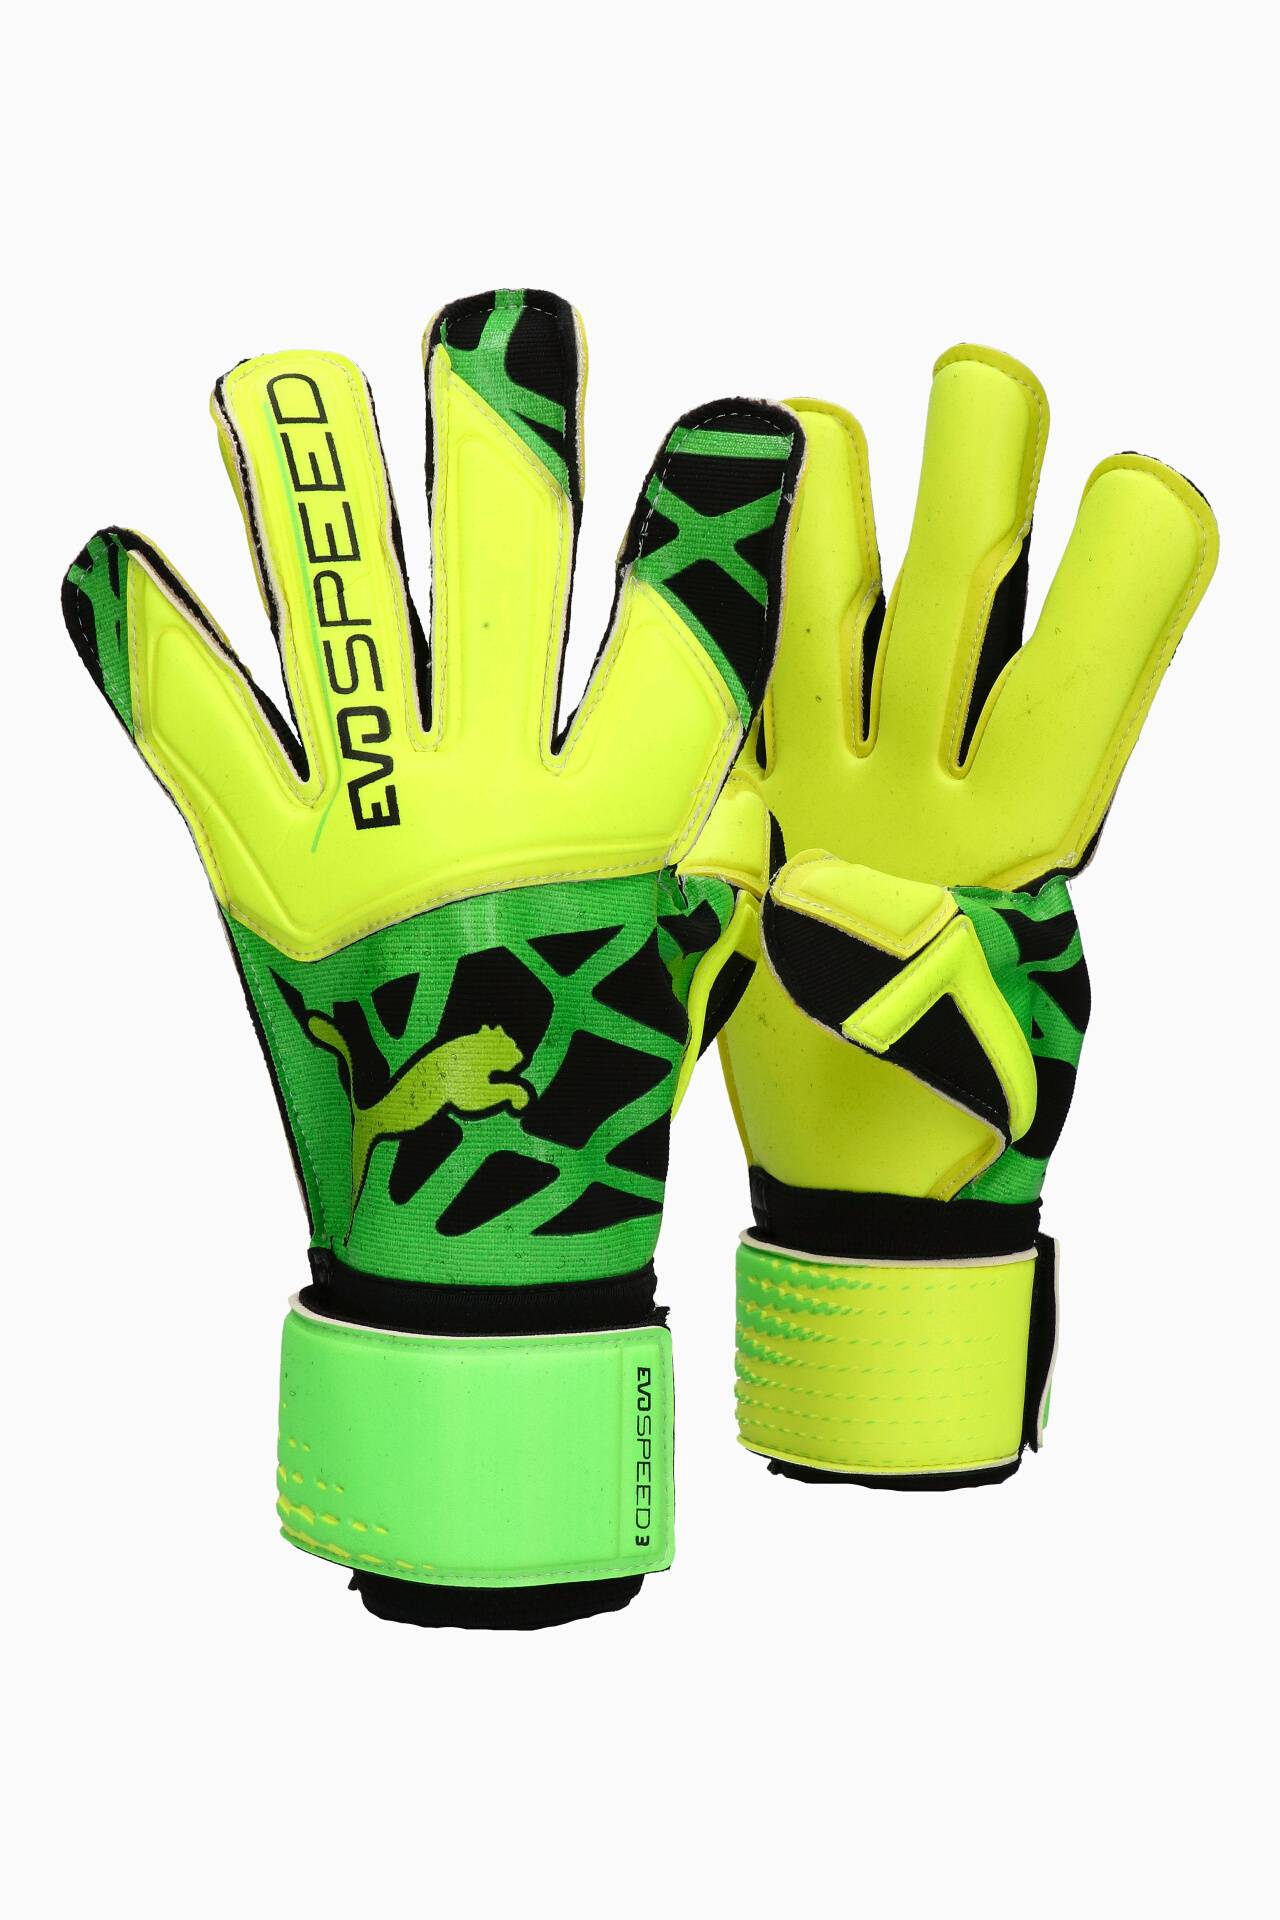 Opposition Sky anywhere Goalkeeper Gloves Puma evoSpeed 3.5 | R-GOL.com - Football boots & equipment